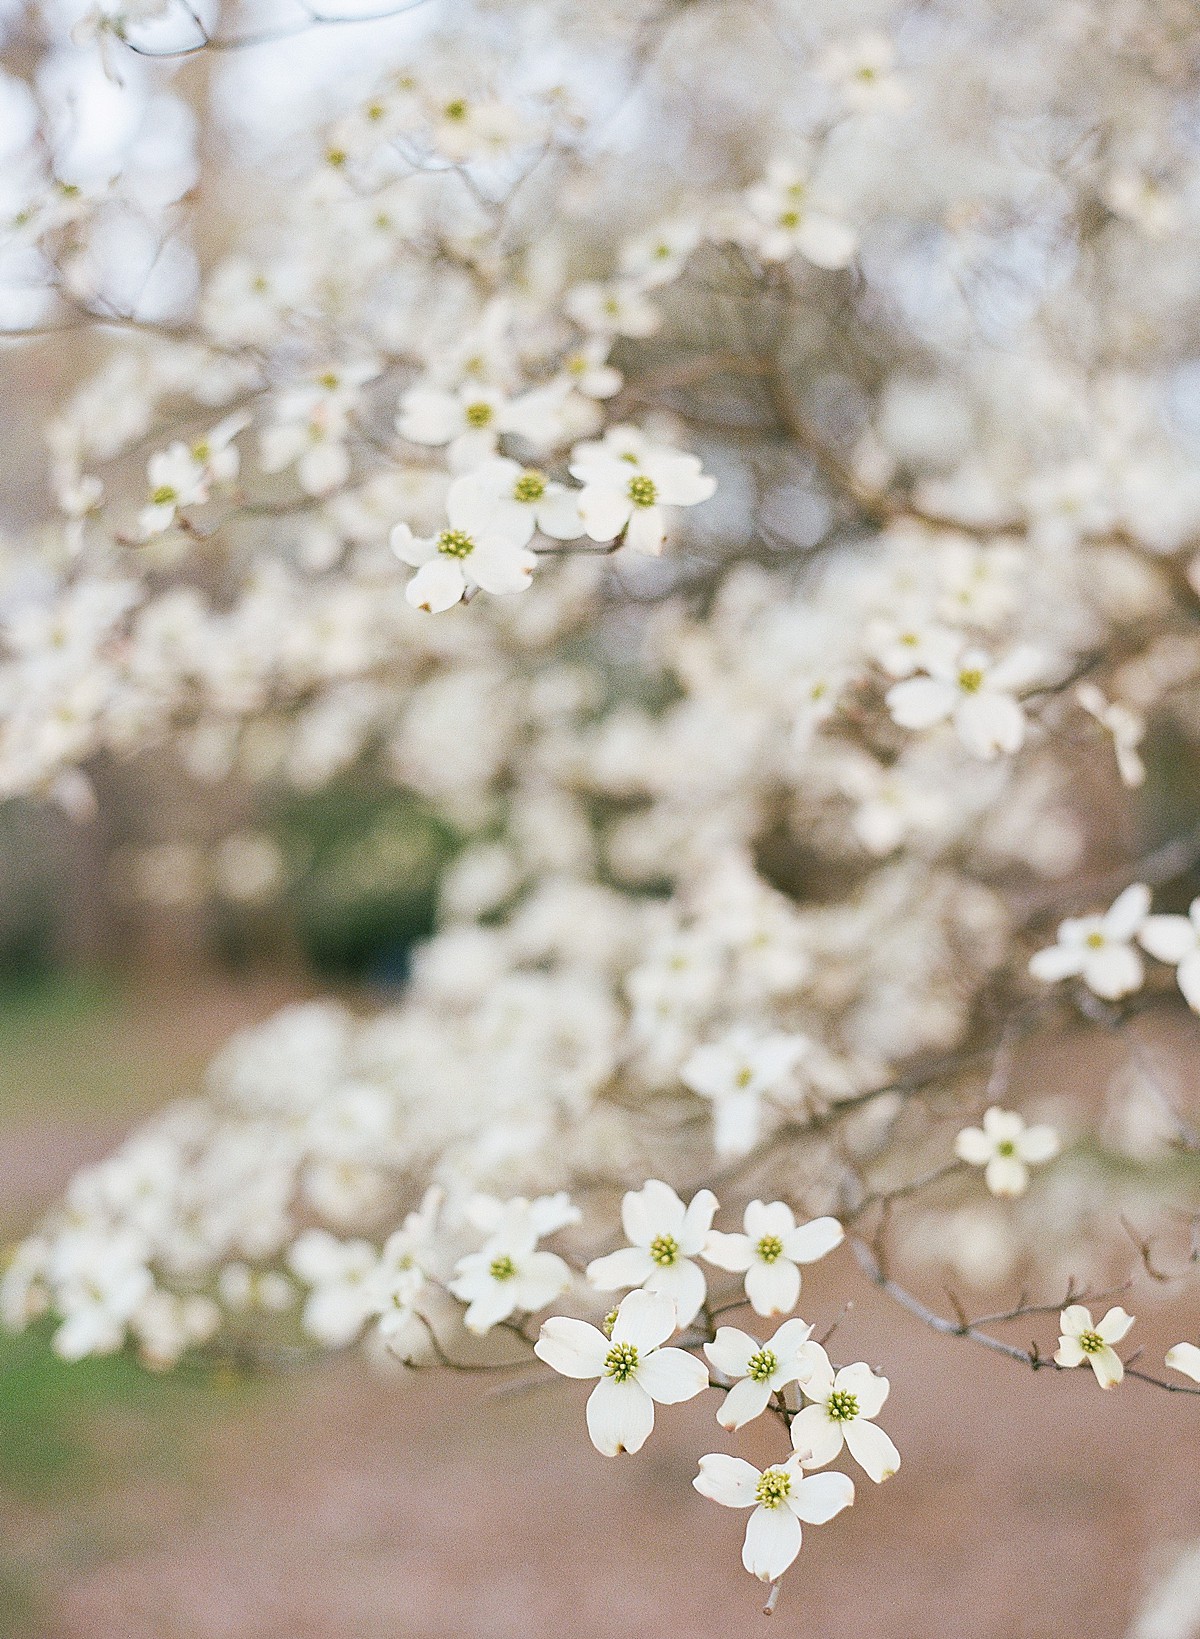 Dogwood blooms in Piedmont Park, Atlanta